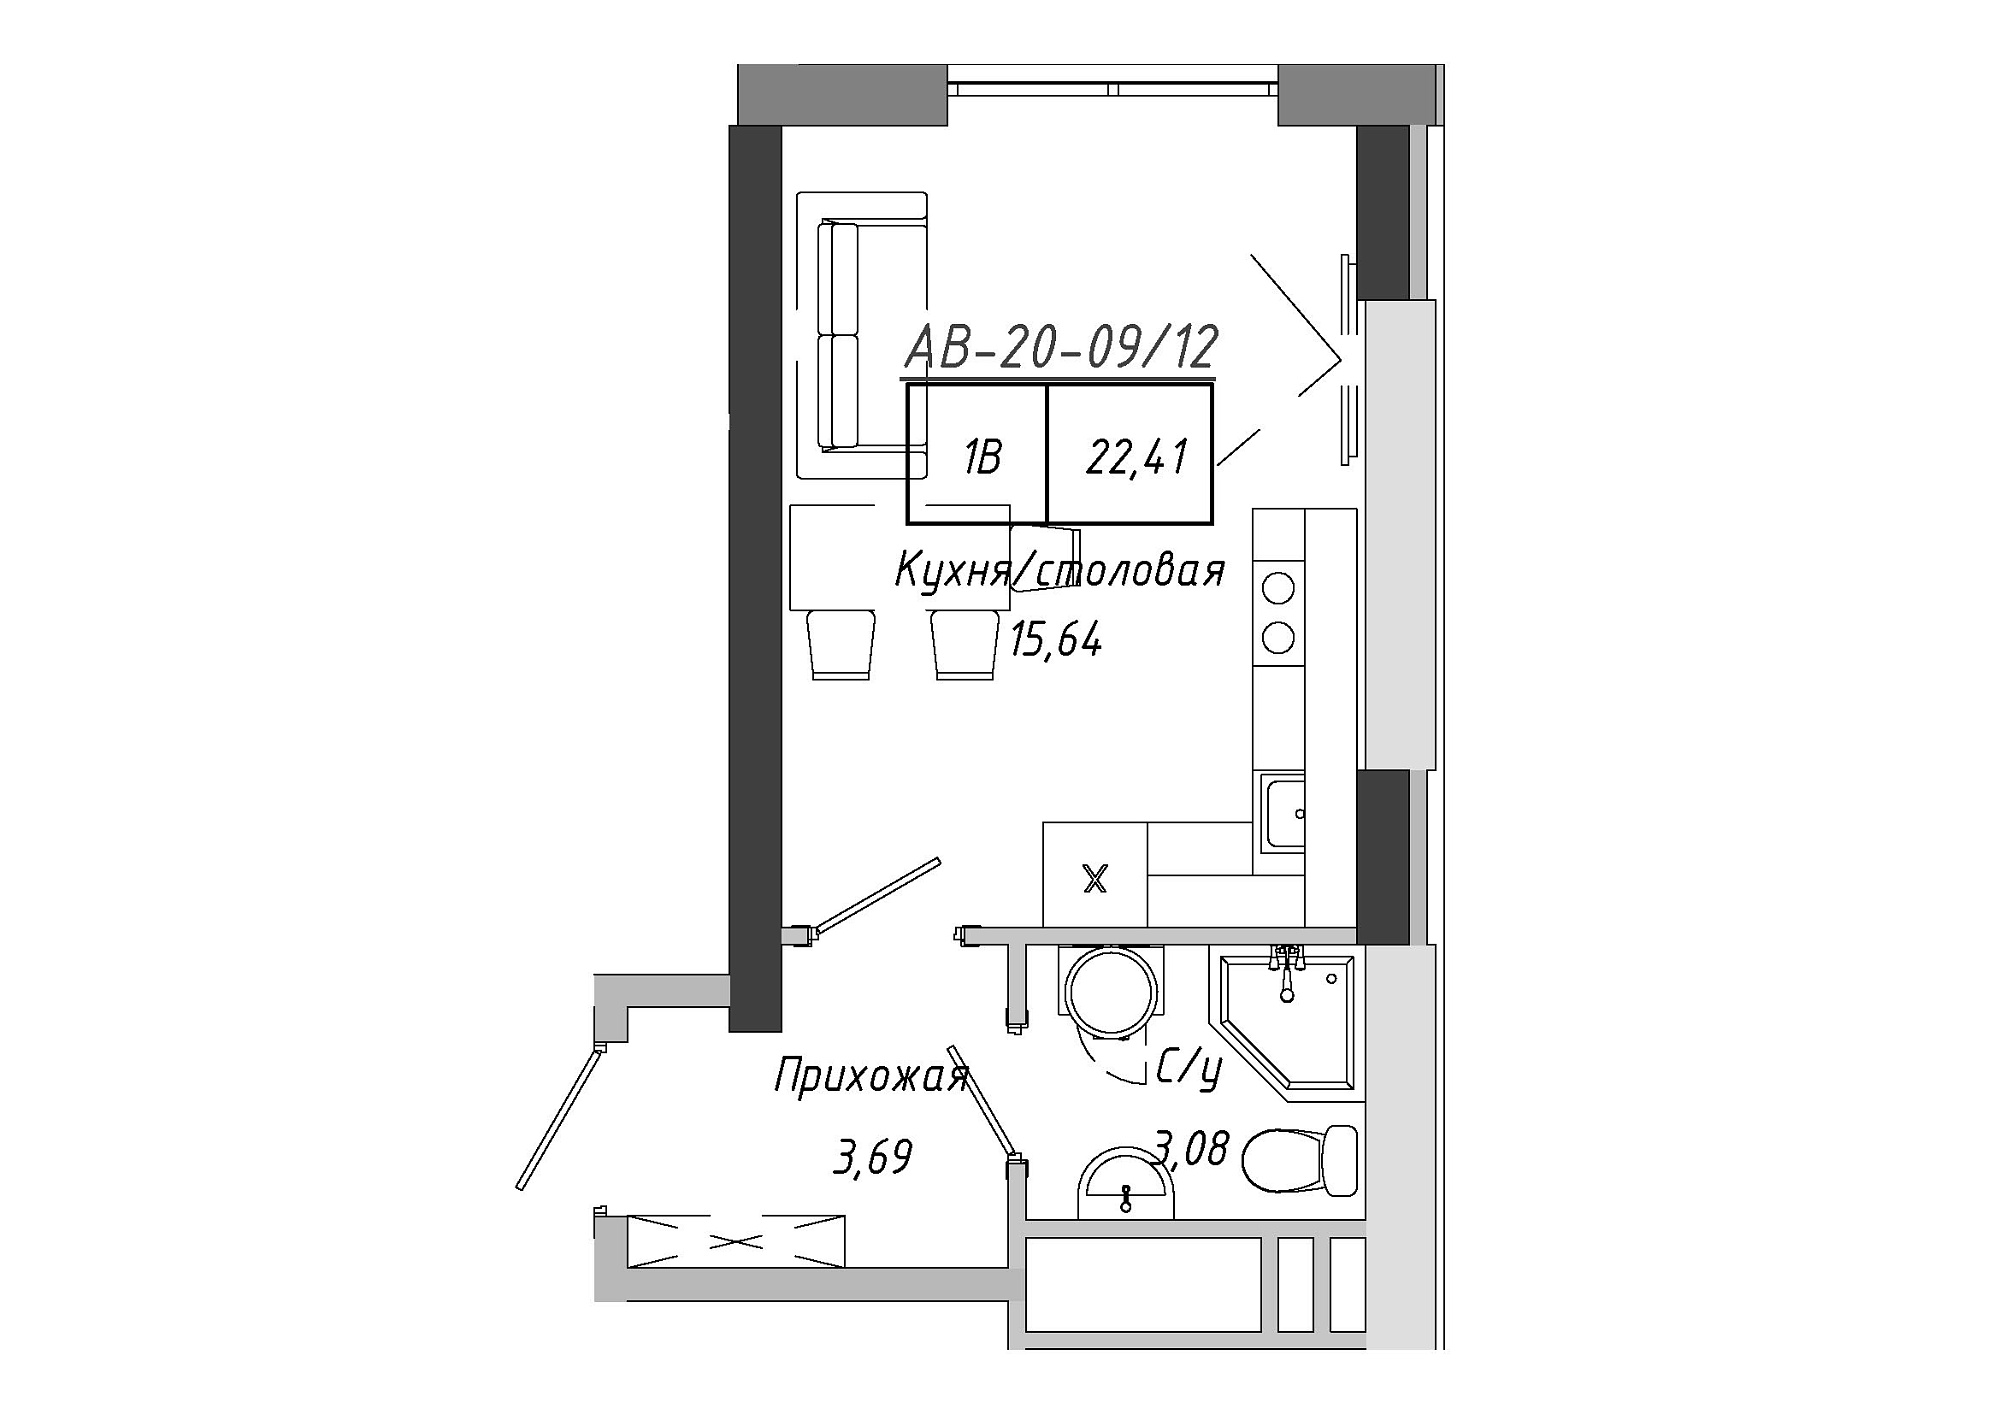 Planning Smart flats area 21.87m2, AB-20-09/00012.